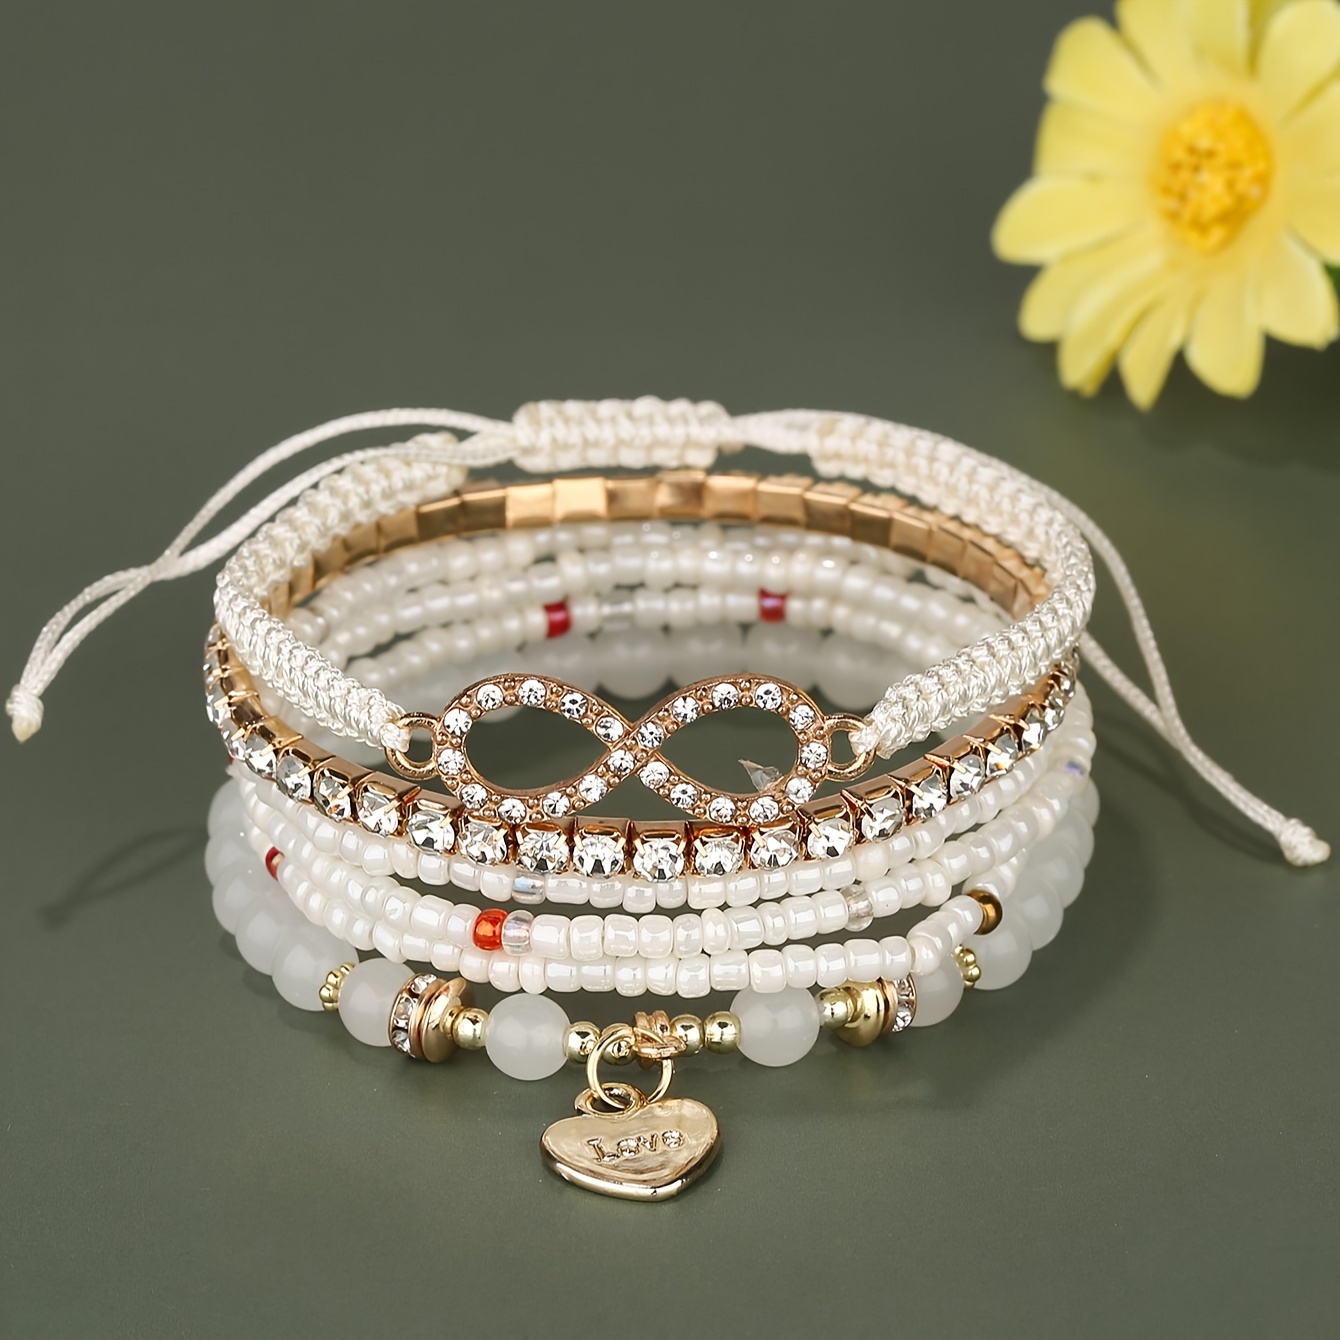 

6 Pcs Set Of Colorful Rice Beads Design Bracelet With Heart Pendant Dainty Bracelet For Women